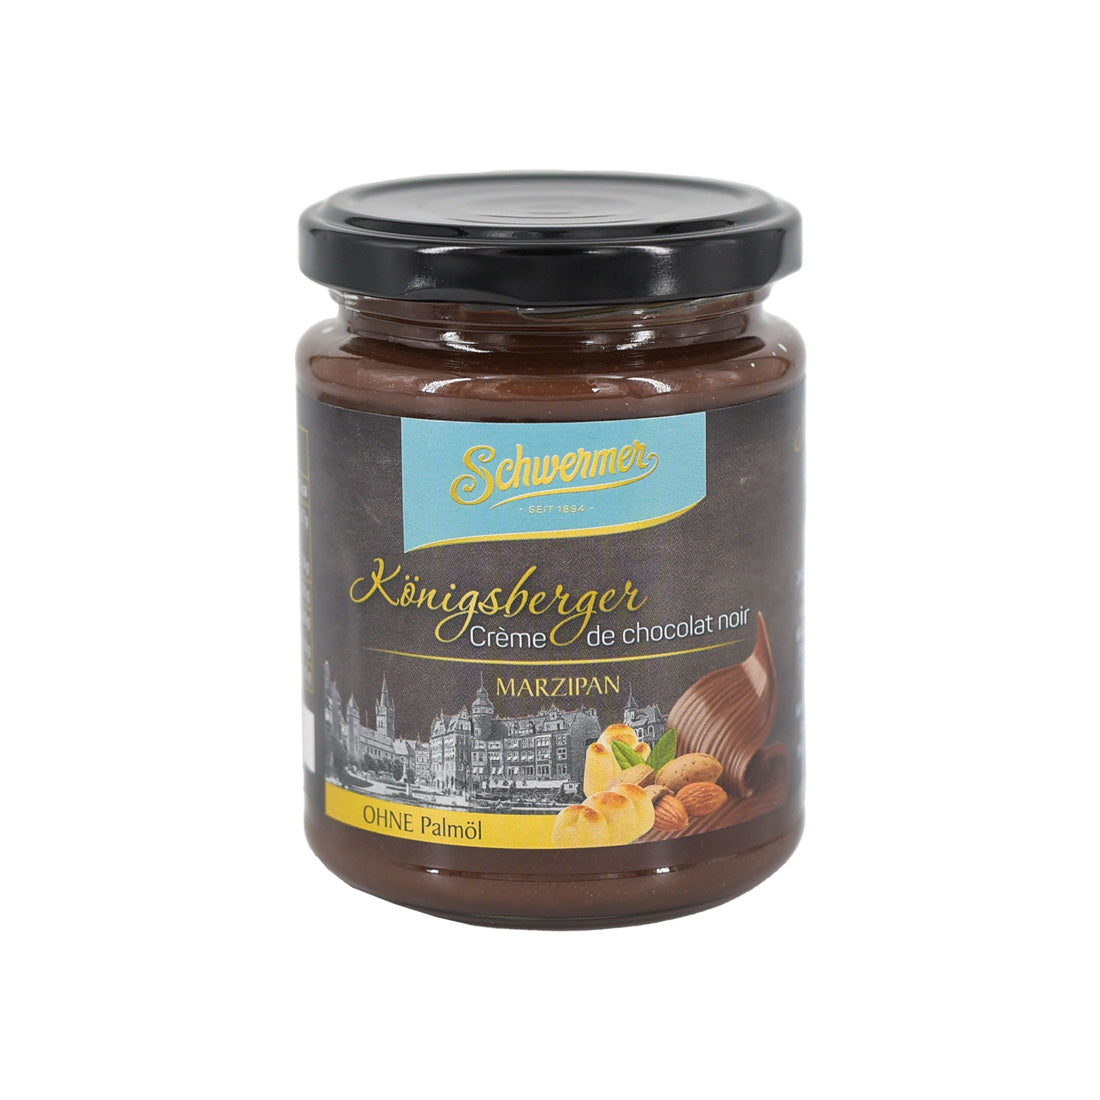 Königsberger Créme de chocolat noir Marzipan